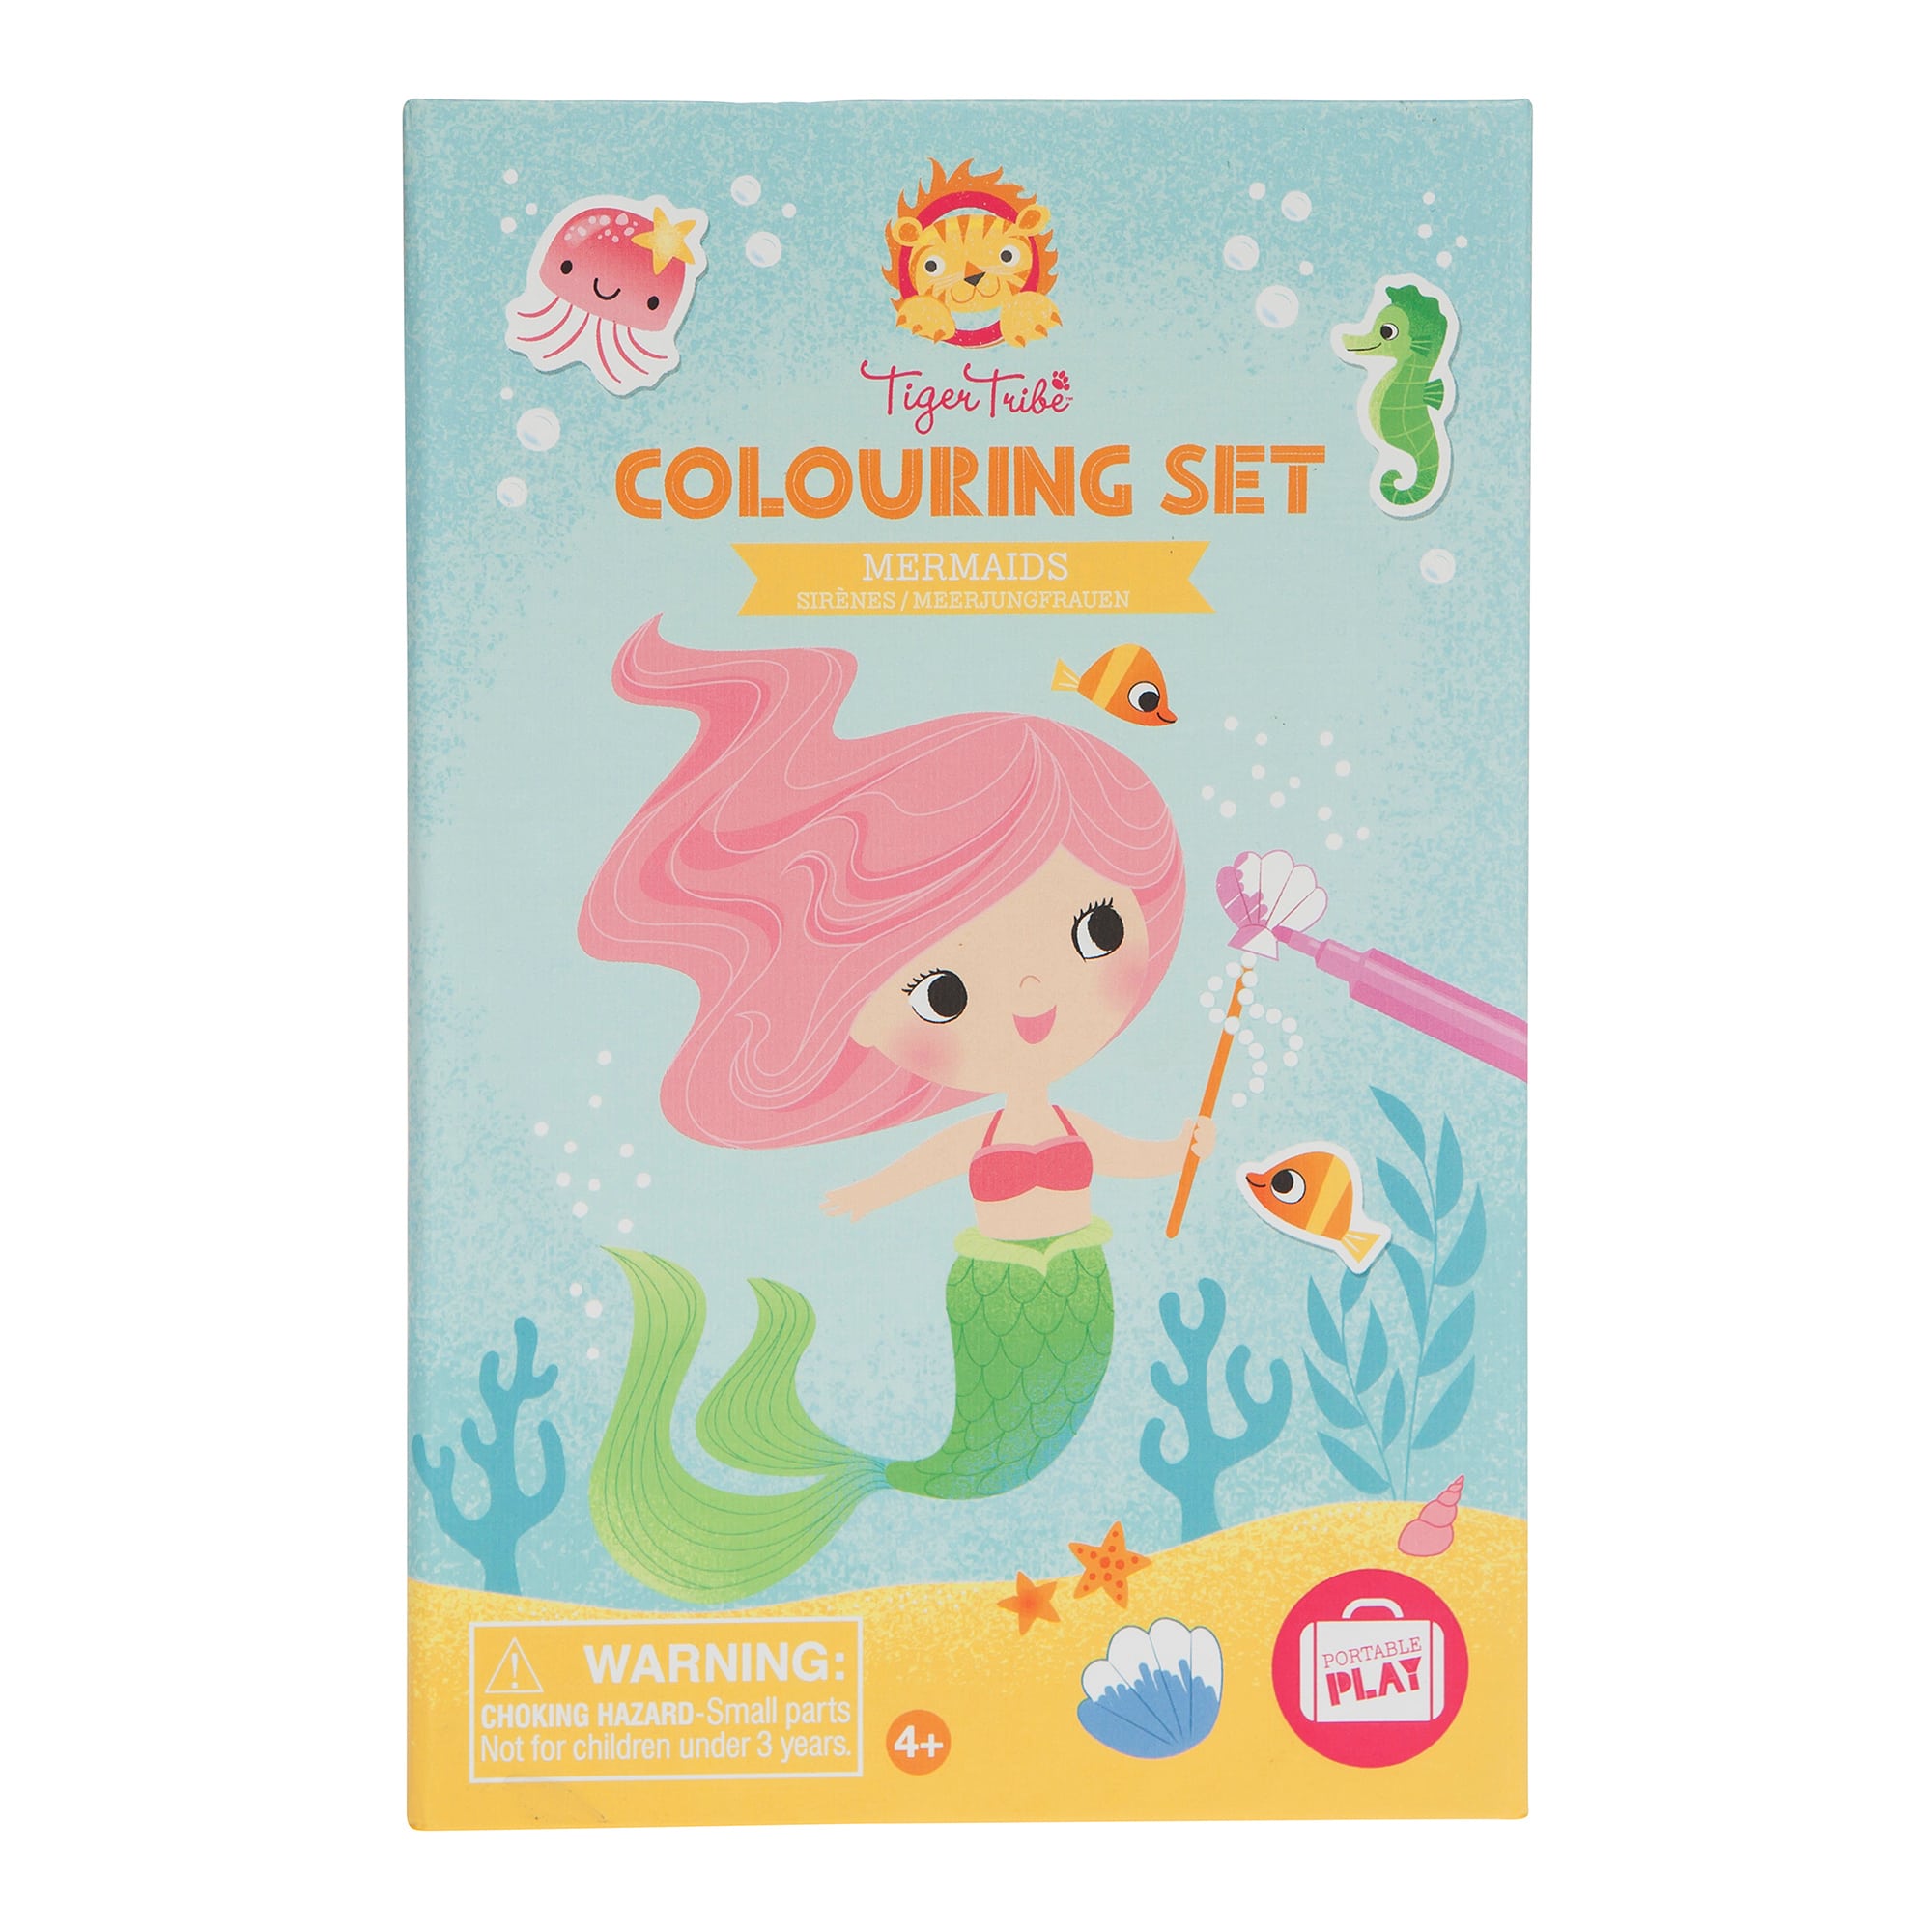 Coloring Set - Mermaids    